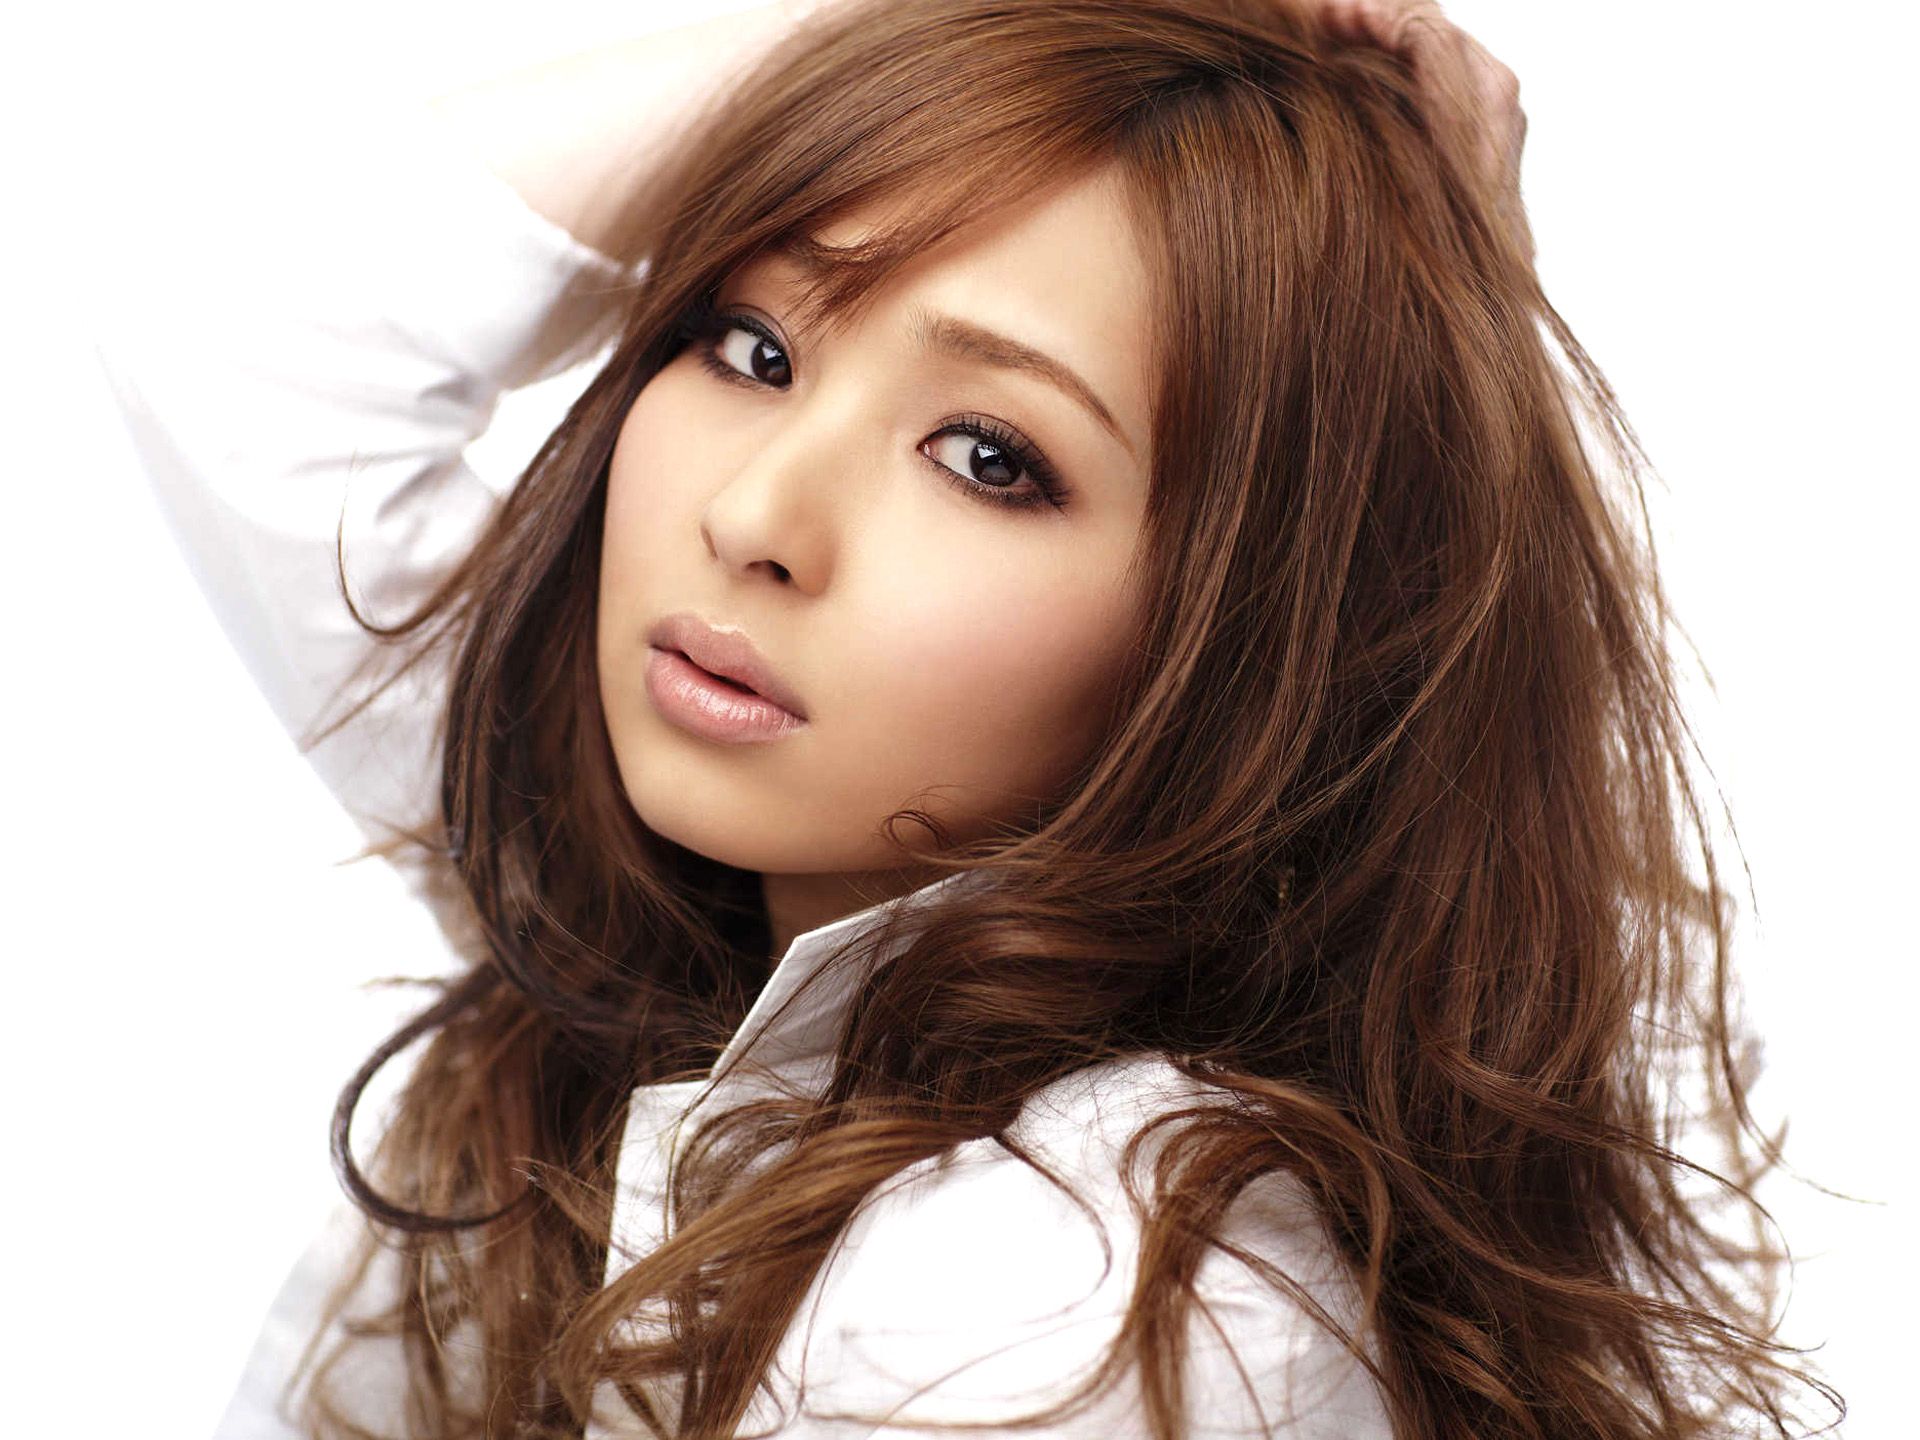 http://www.reckontalk.com/wp-content/uploads/2015/06/Top-10-Most-Beautiful-Japanese-Women-in-the-World-Hot-Actress-Japan-5.jpg